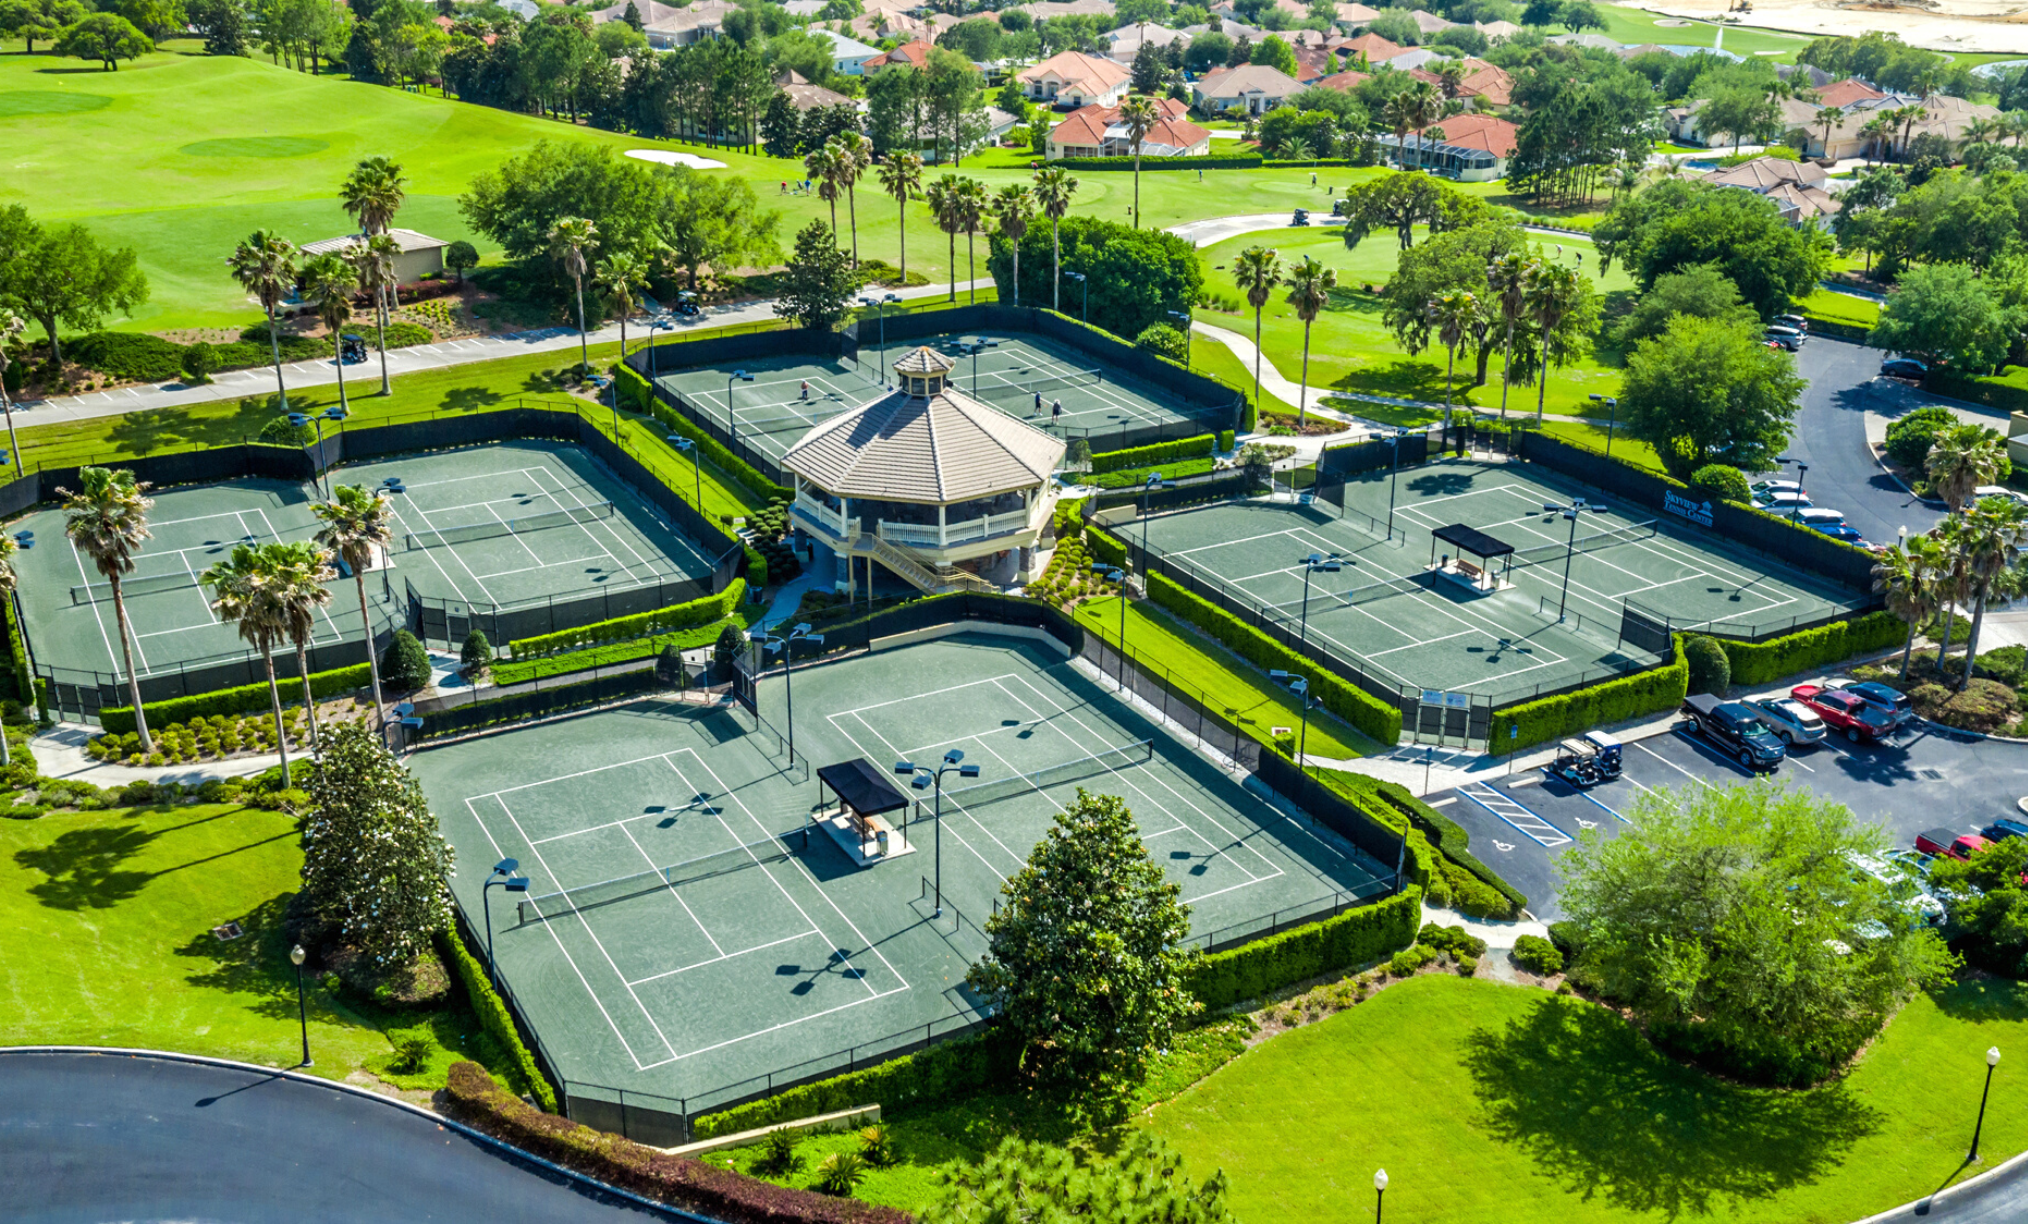 8 Har-Tru Tennis Courts at Skyview Tennis Center